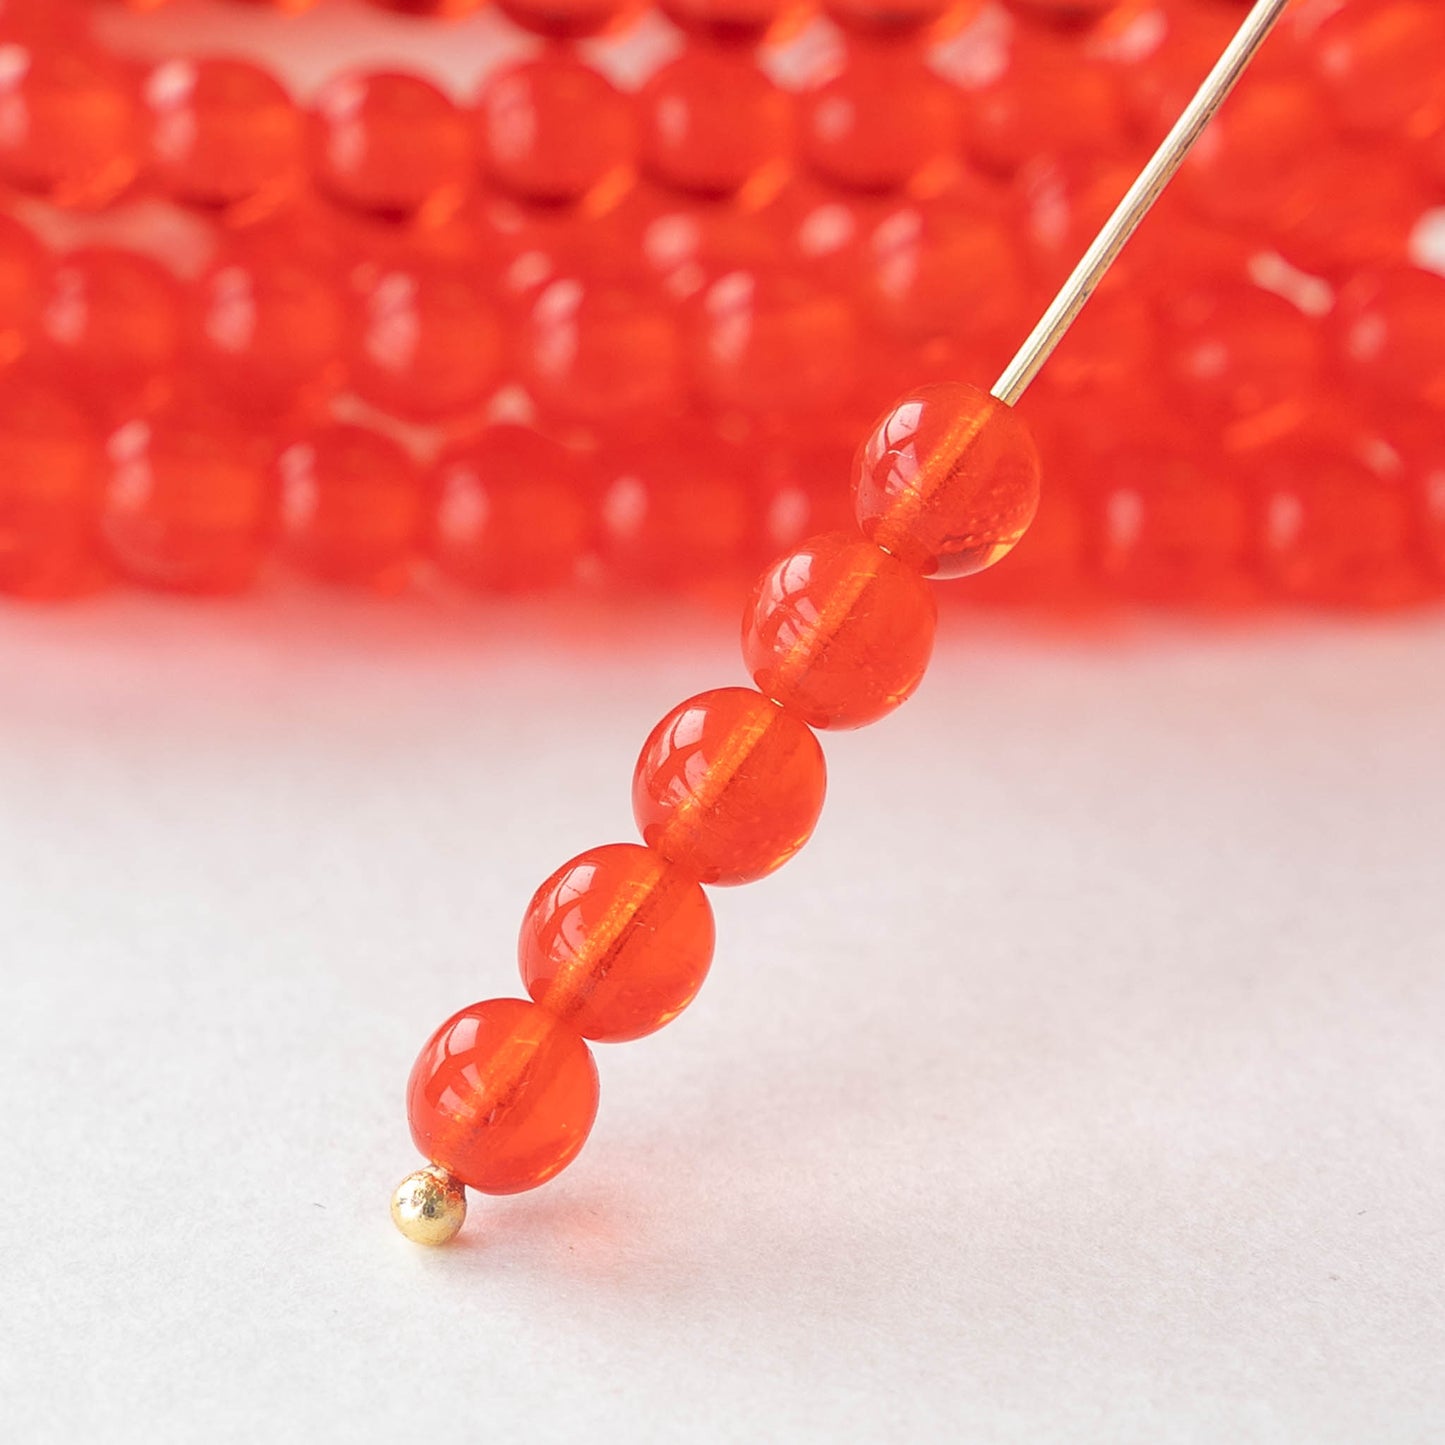 5mm Round Glass Beads - Transparent Dark Orange  - 100 Beads